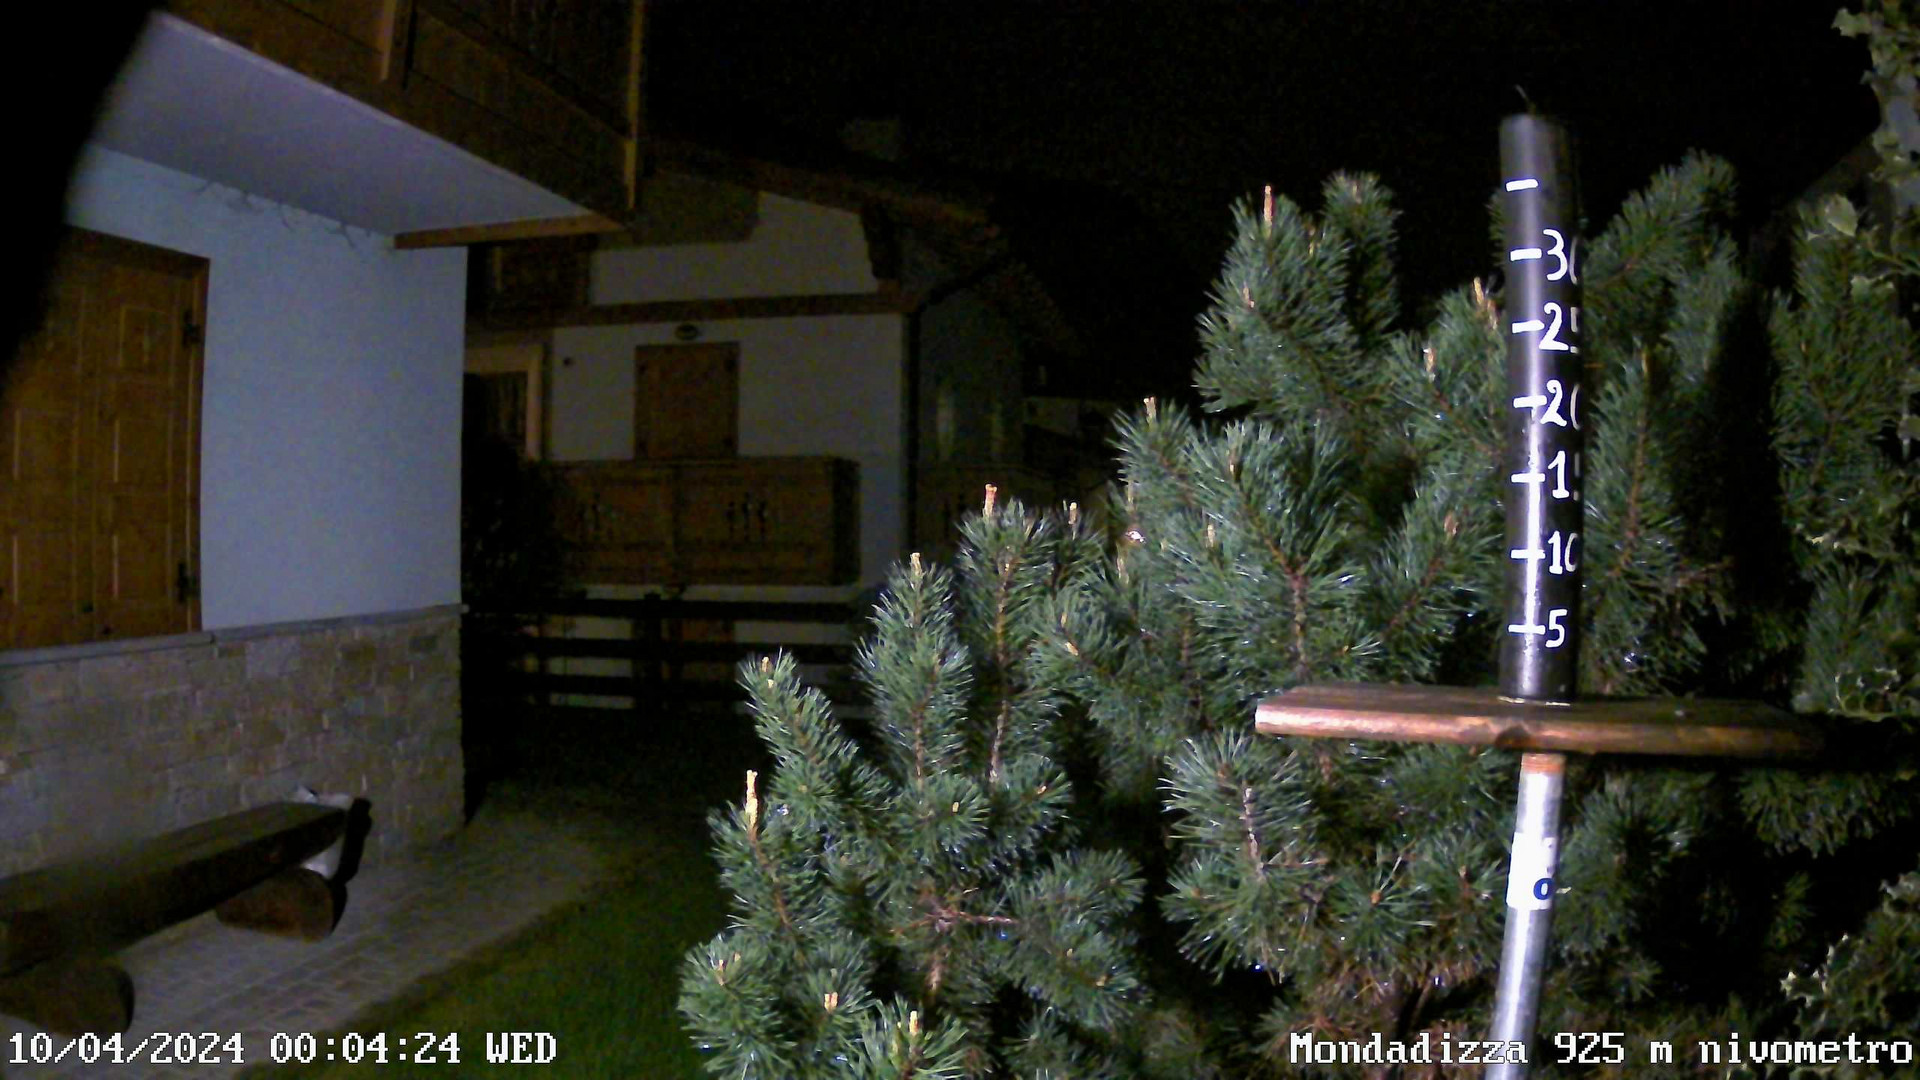 time-lapse frame, Mondadizza 925 m nivometro webcam